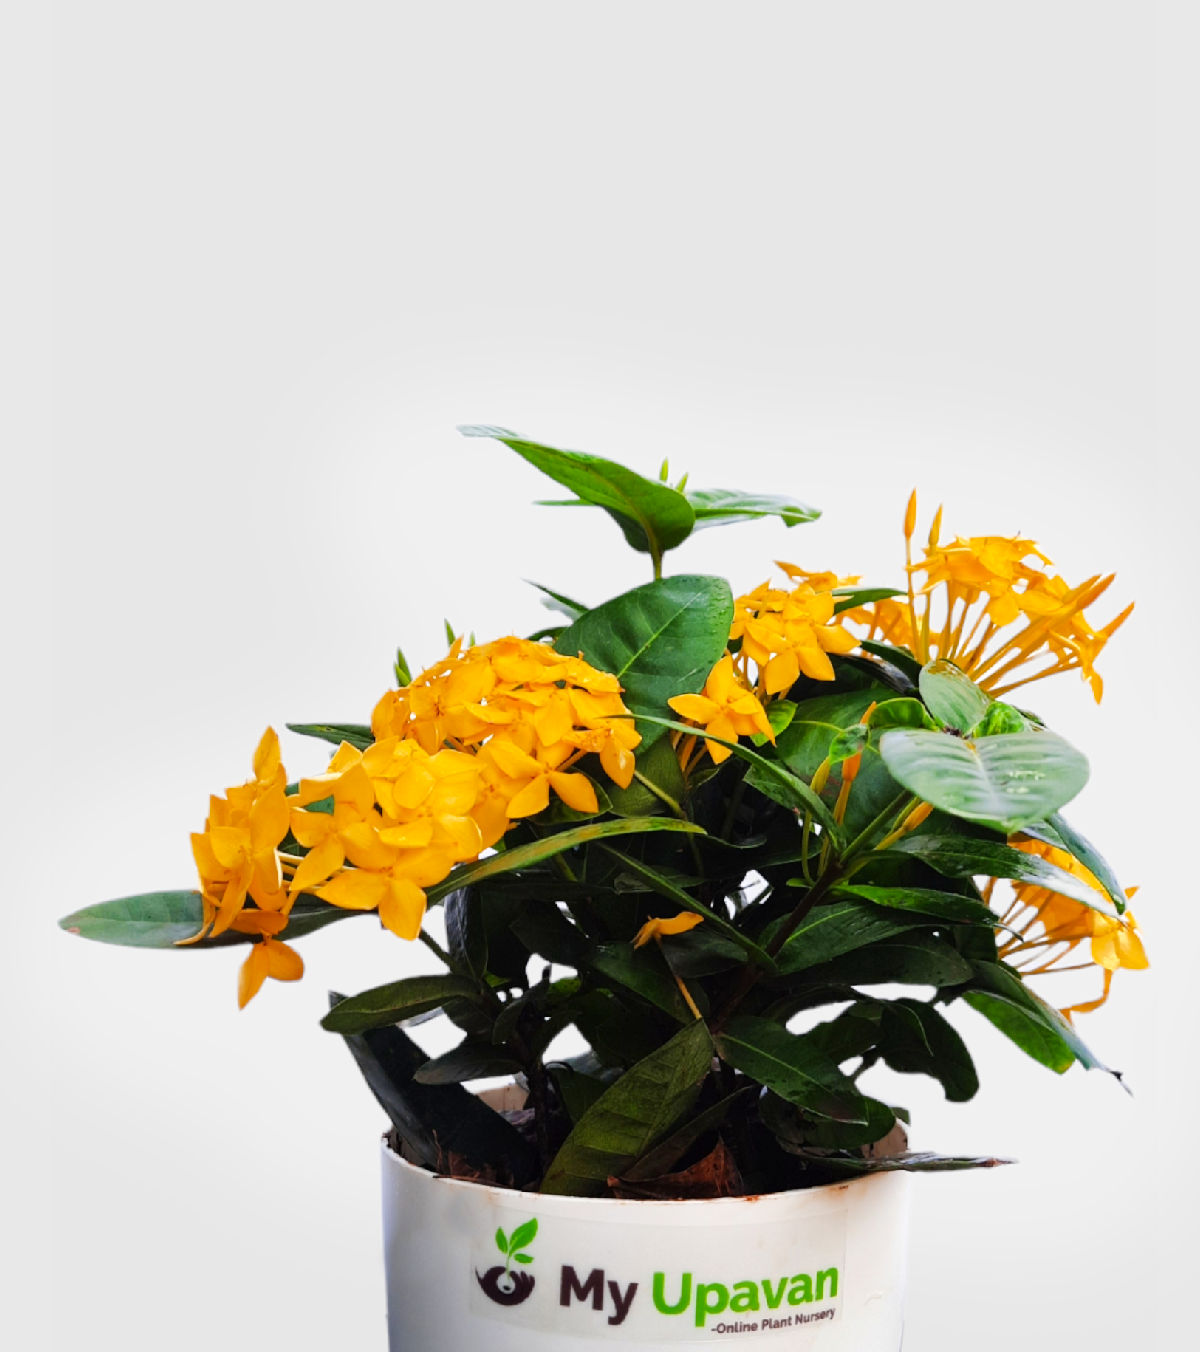 Ixora [Rugmini] Plant - Yellow